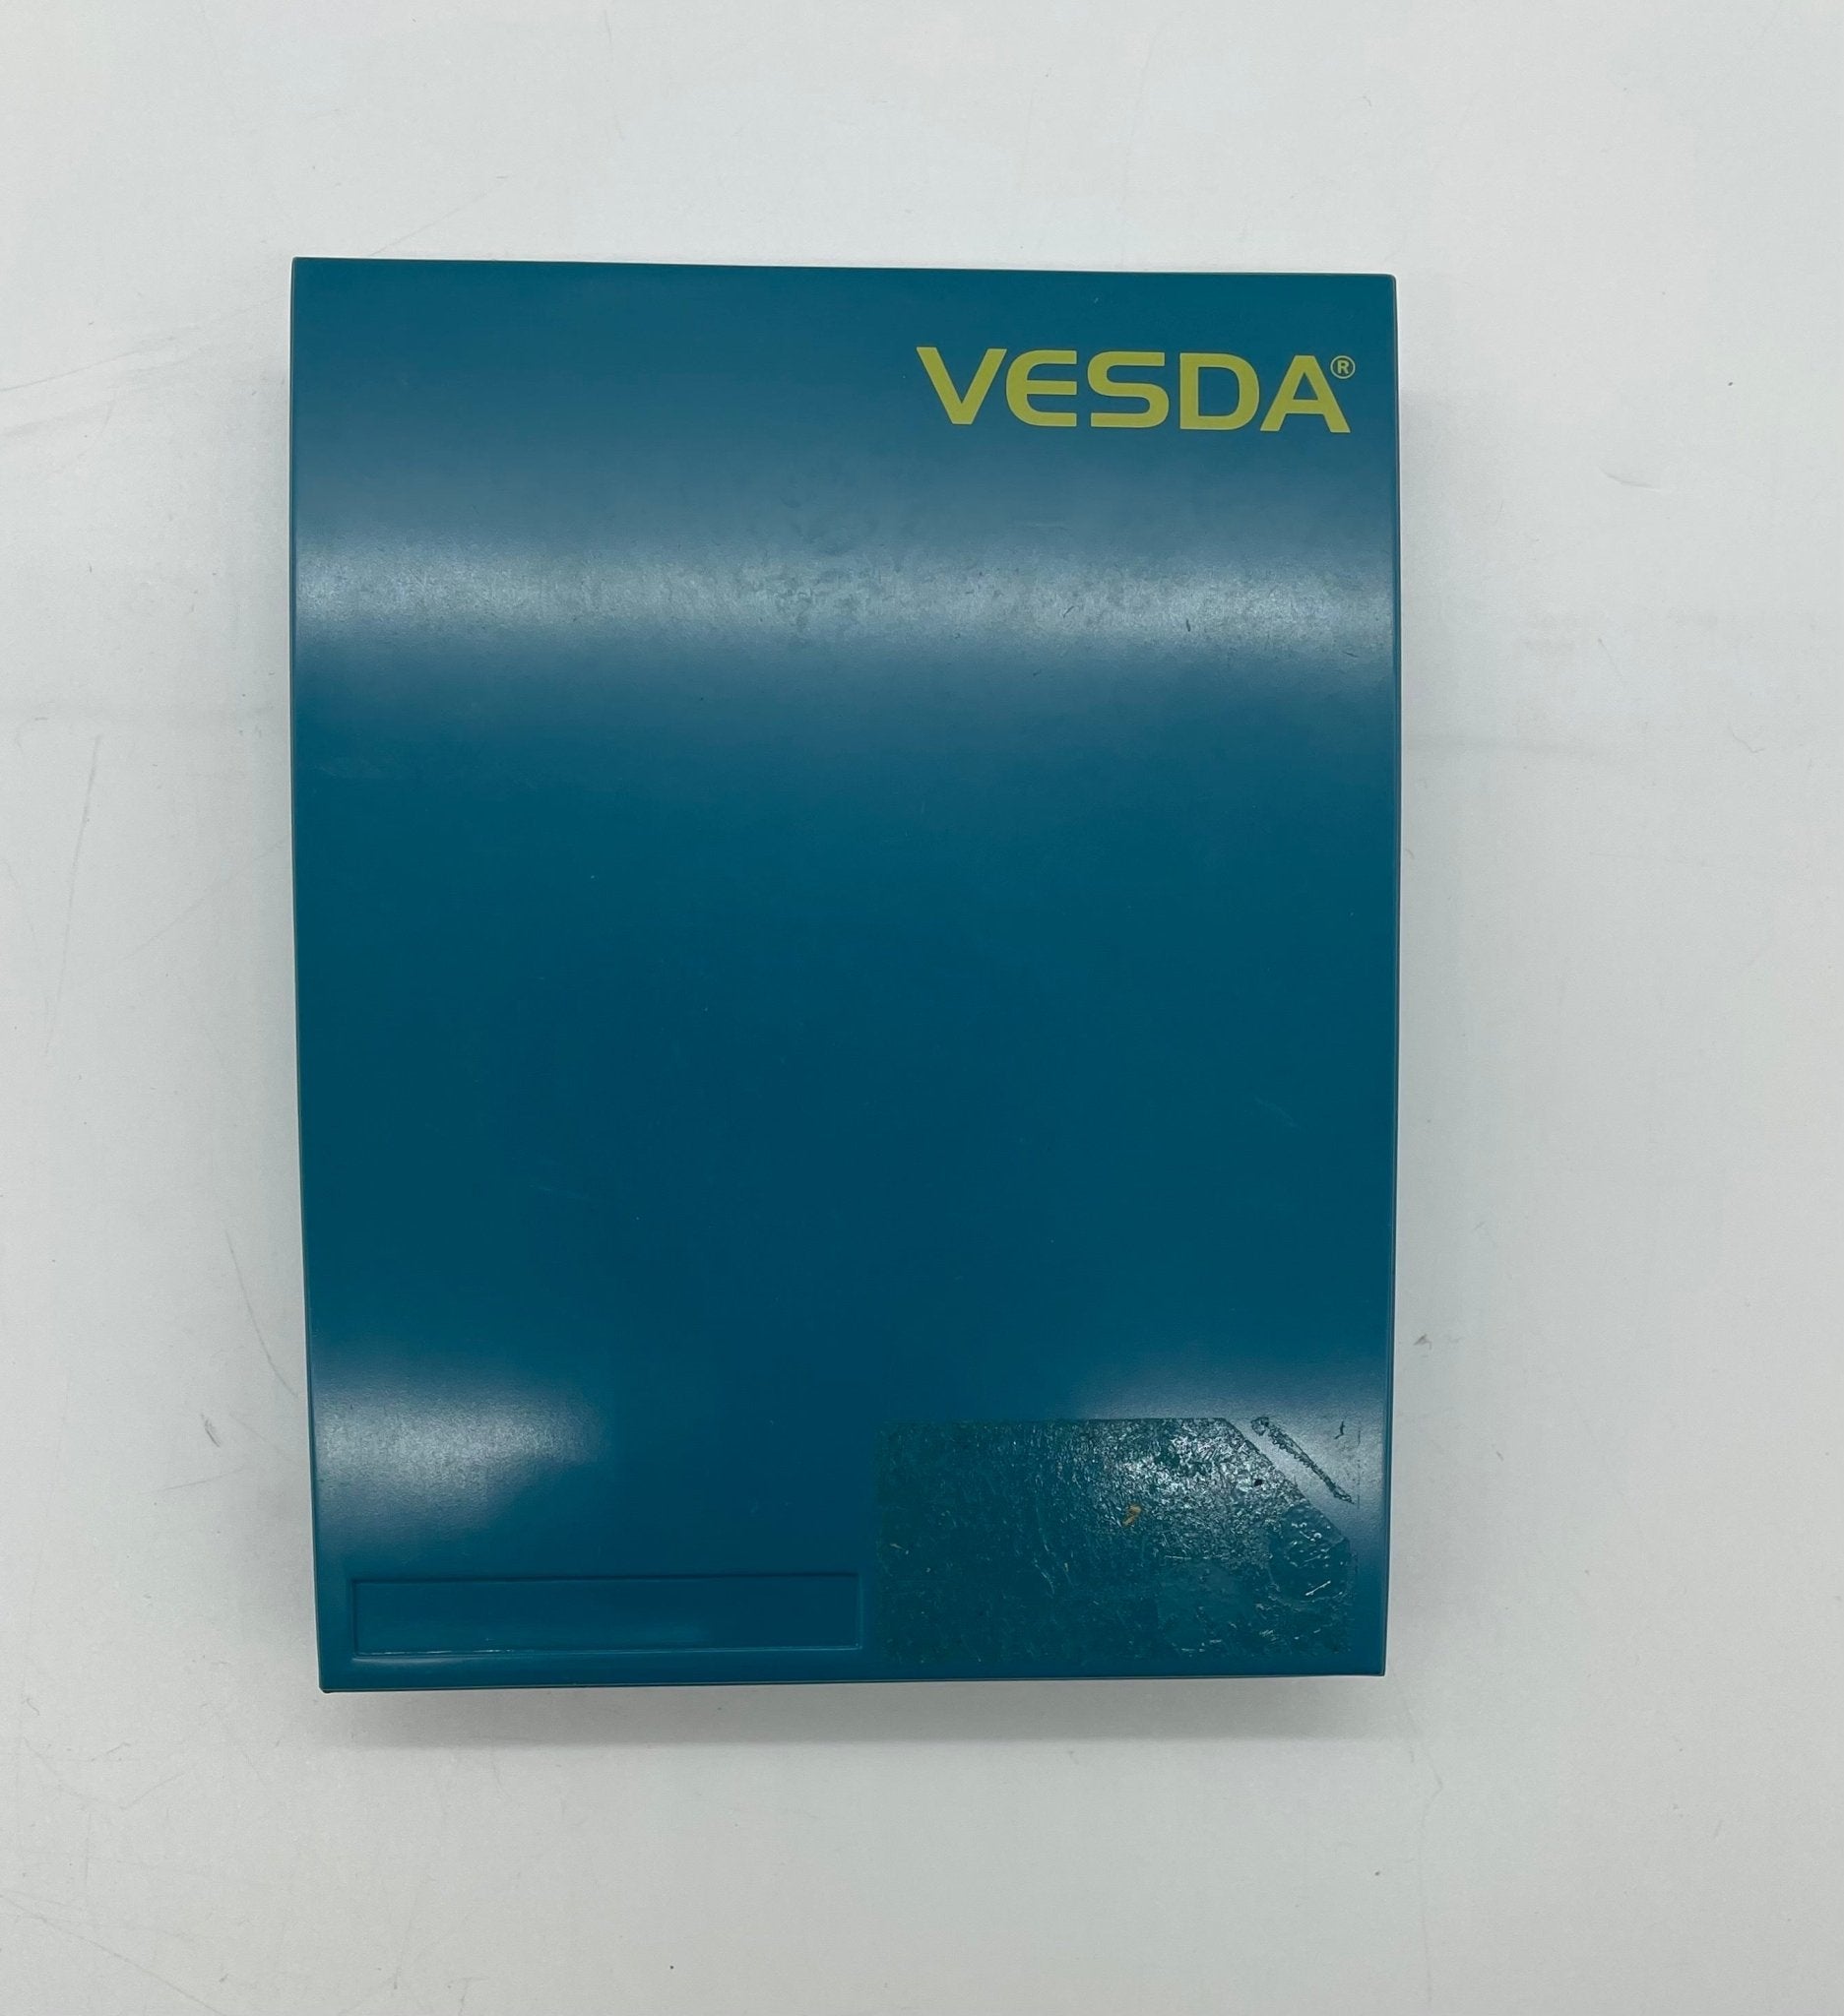 Vesda VSP-540 - The Fire Alarm Supplier